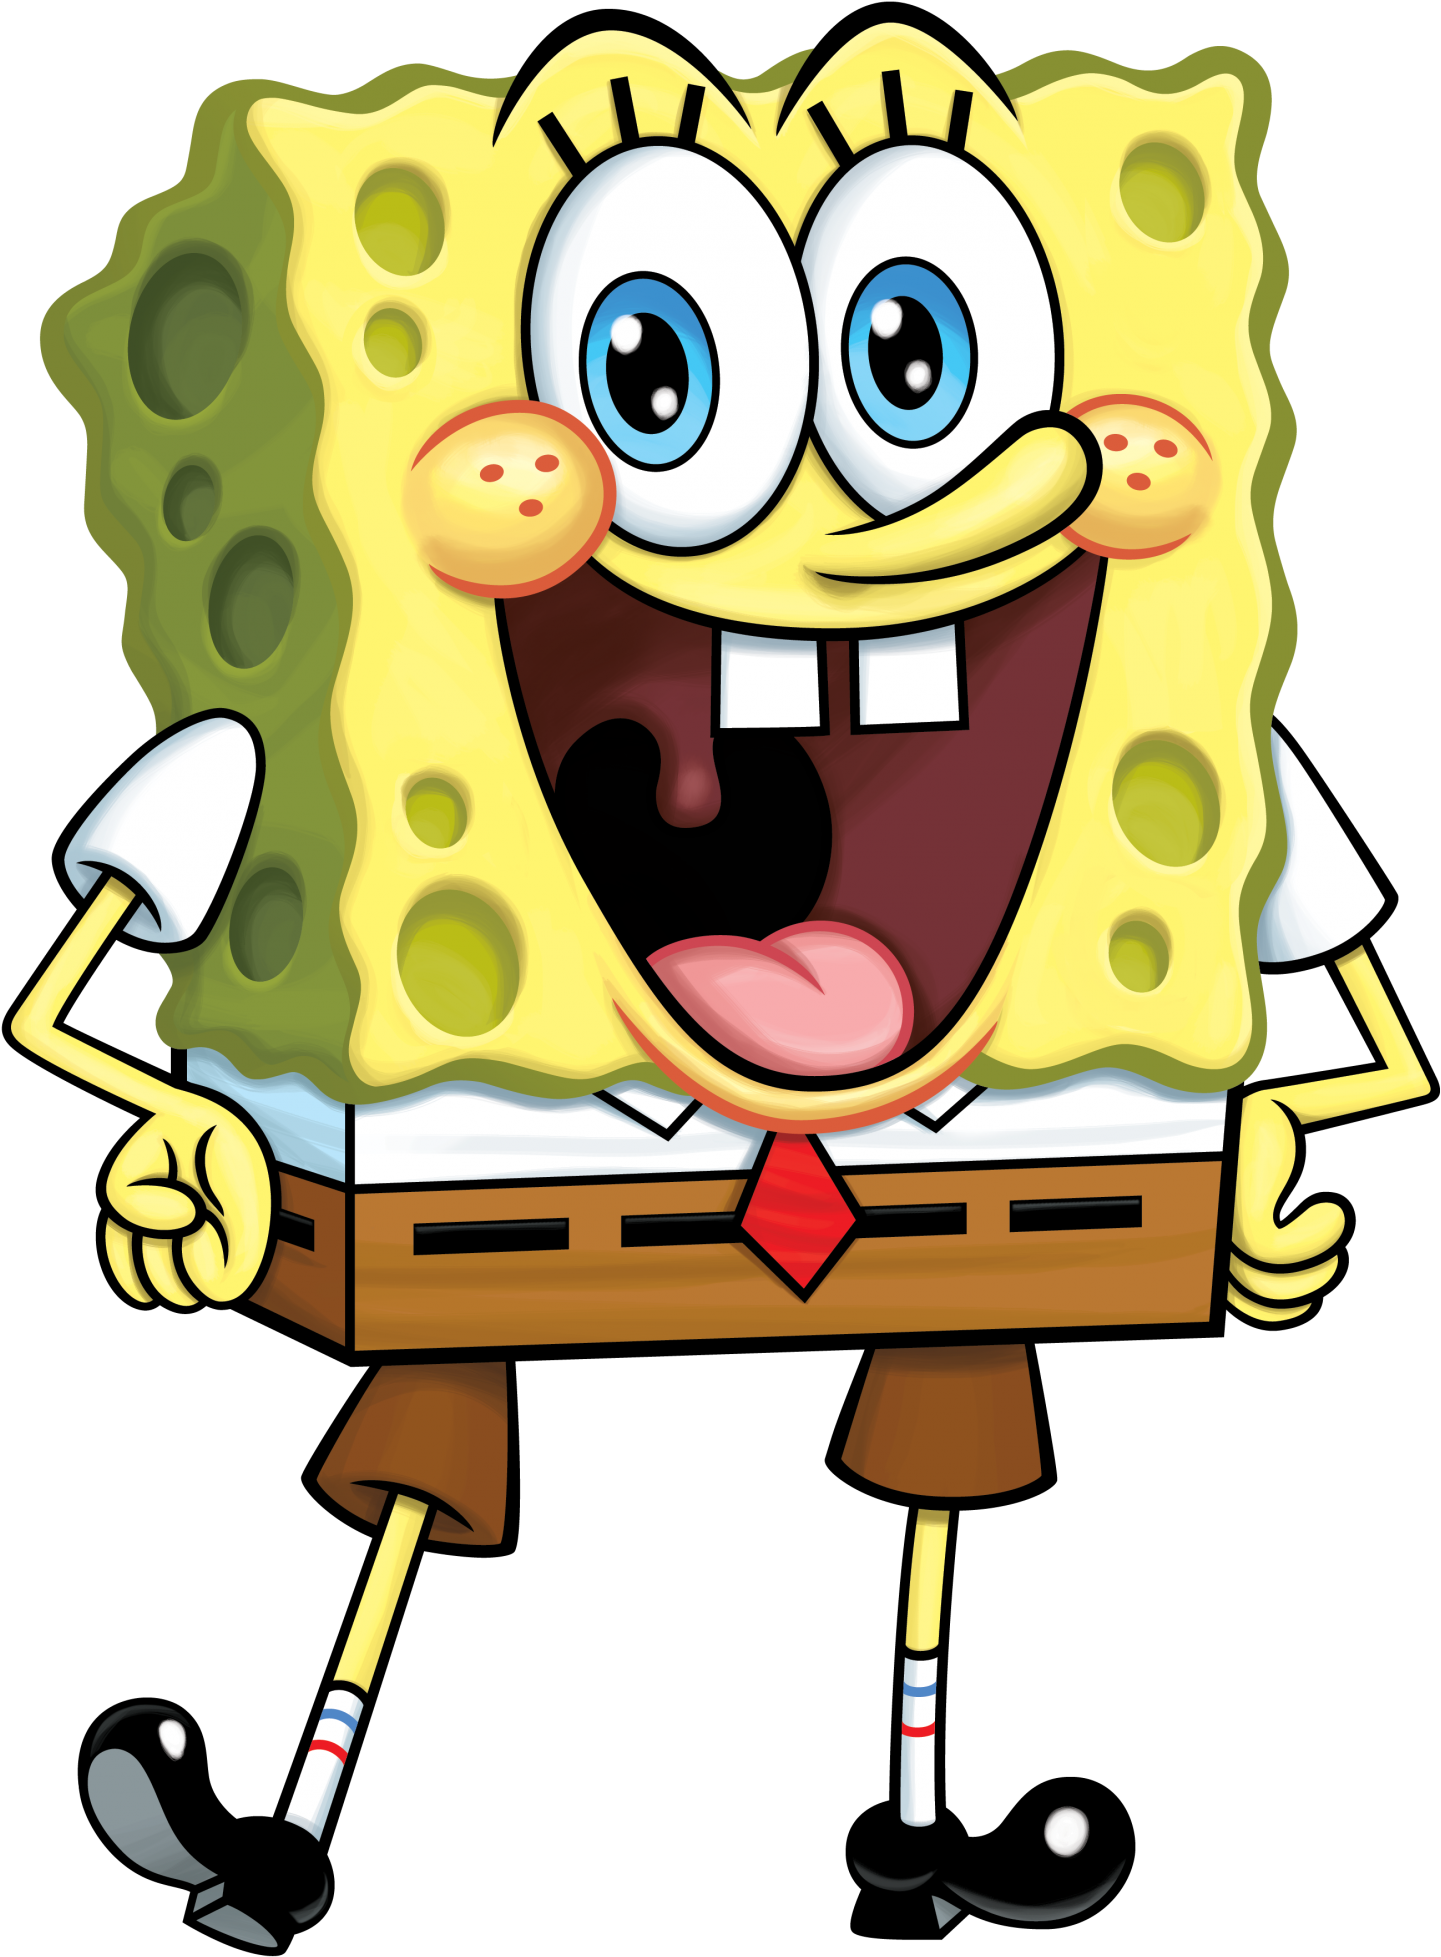 Download Spongebob Squarepants Personajes De Bob Esponja Png Png Image With No Background Pngkey Com